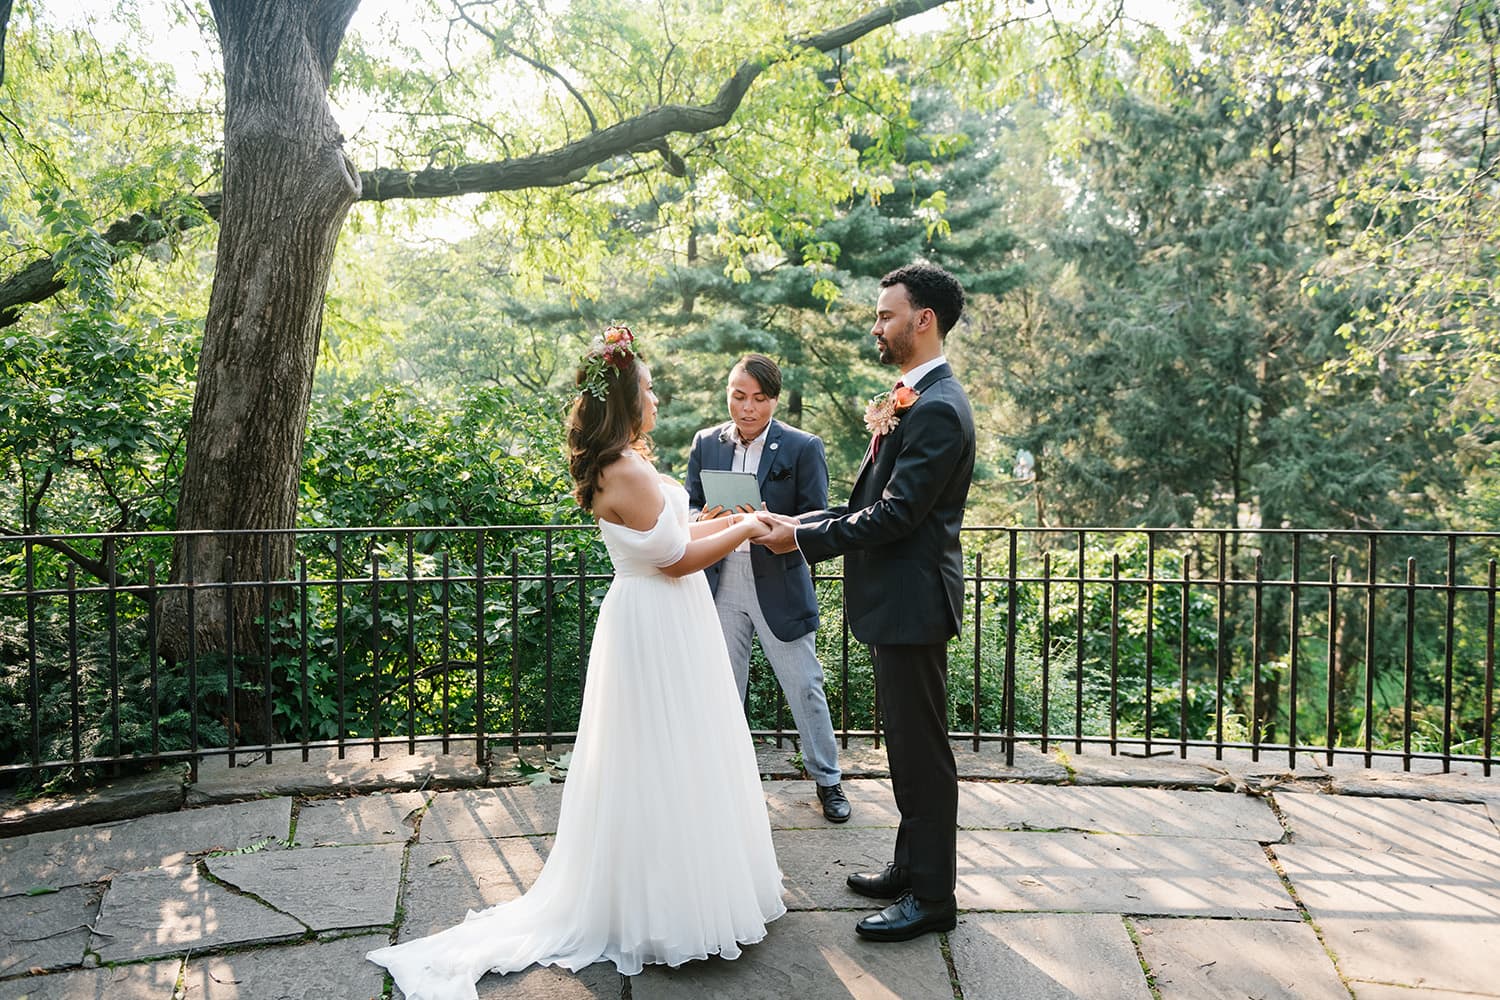 Shakespeare Garden wedding in Central Park NYC